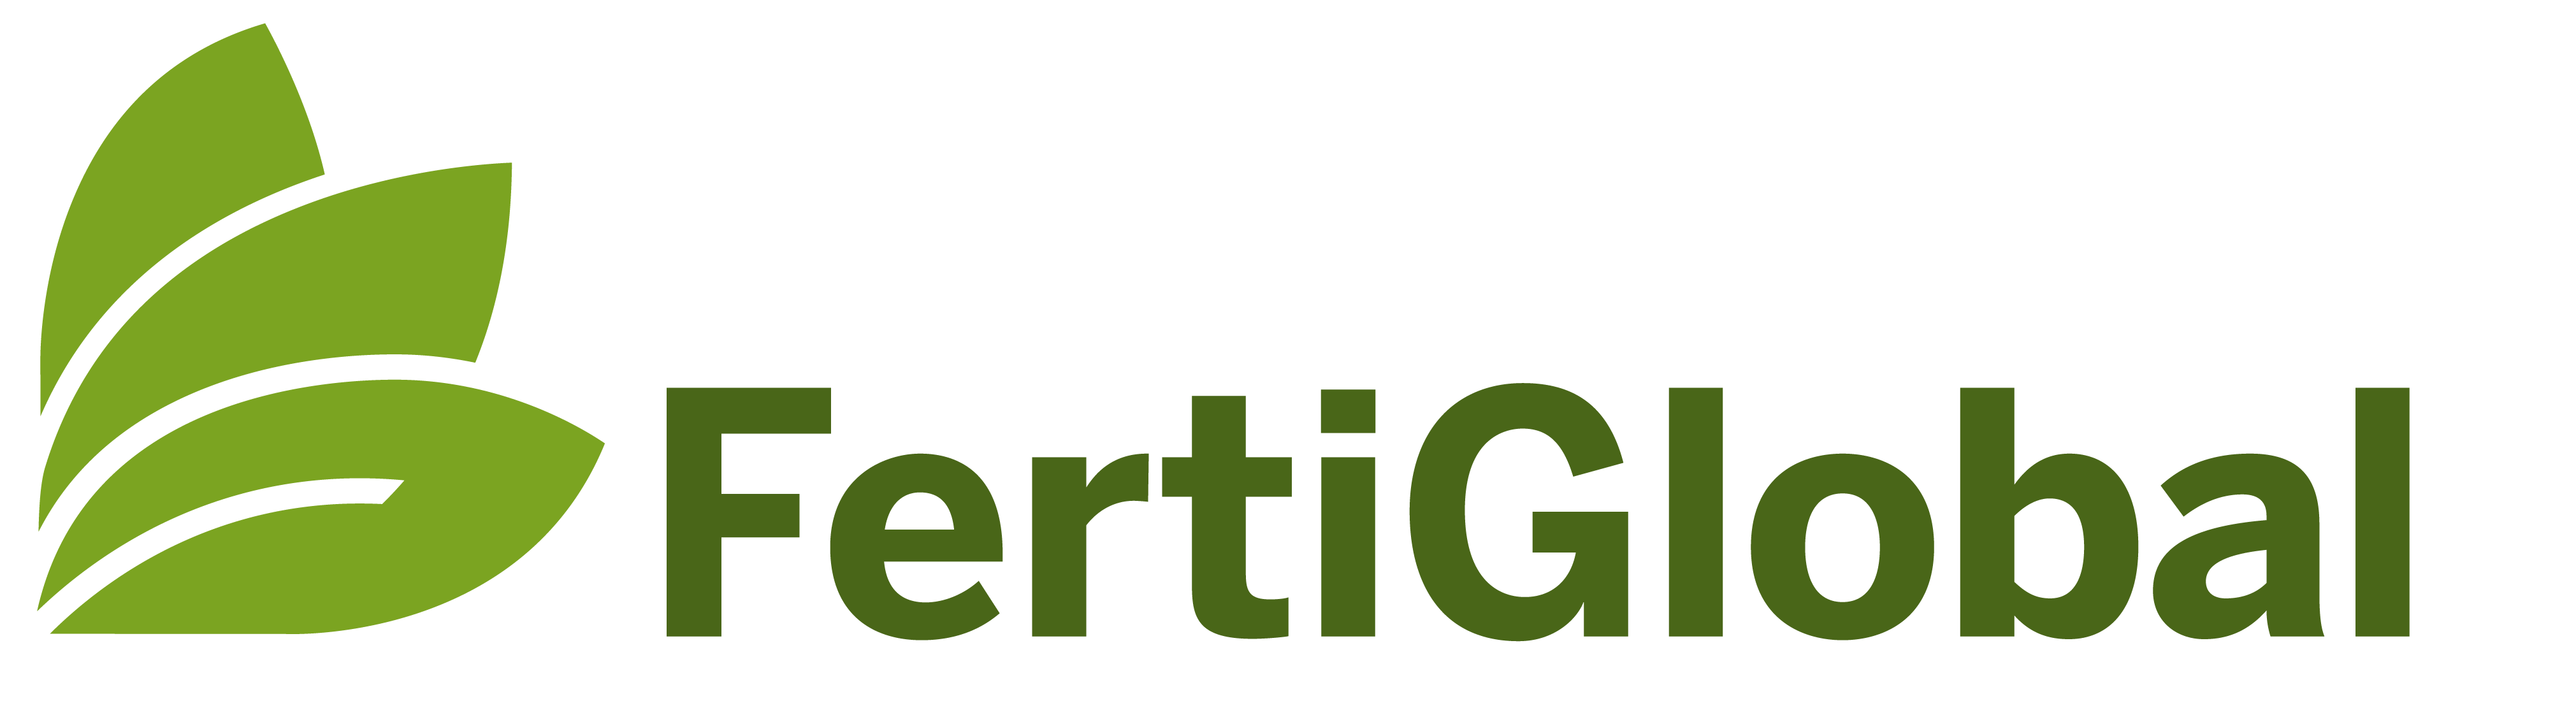 FertiGlobal Logo